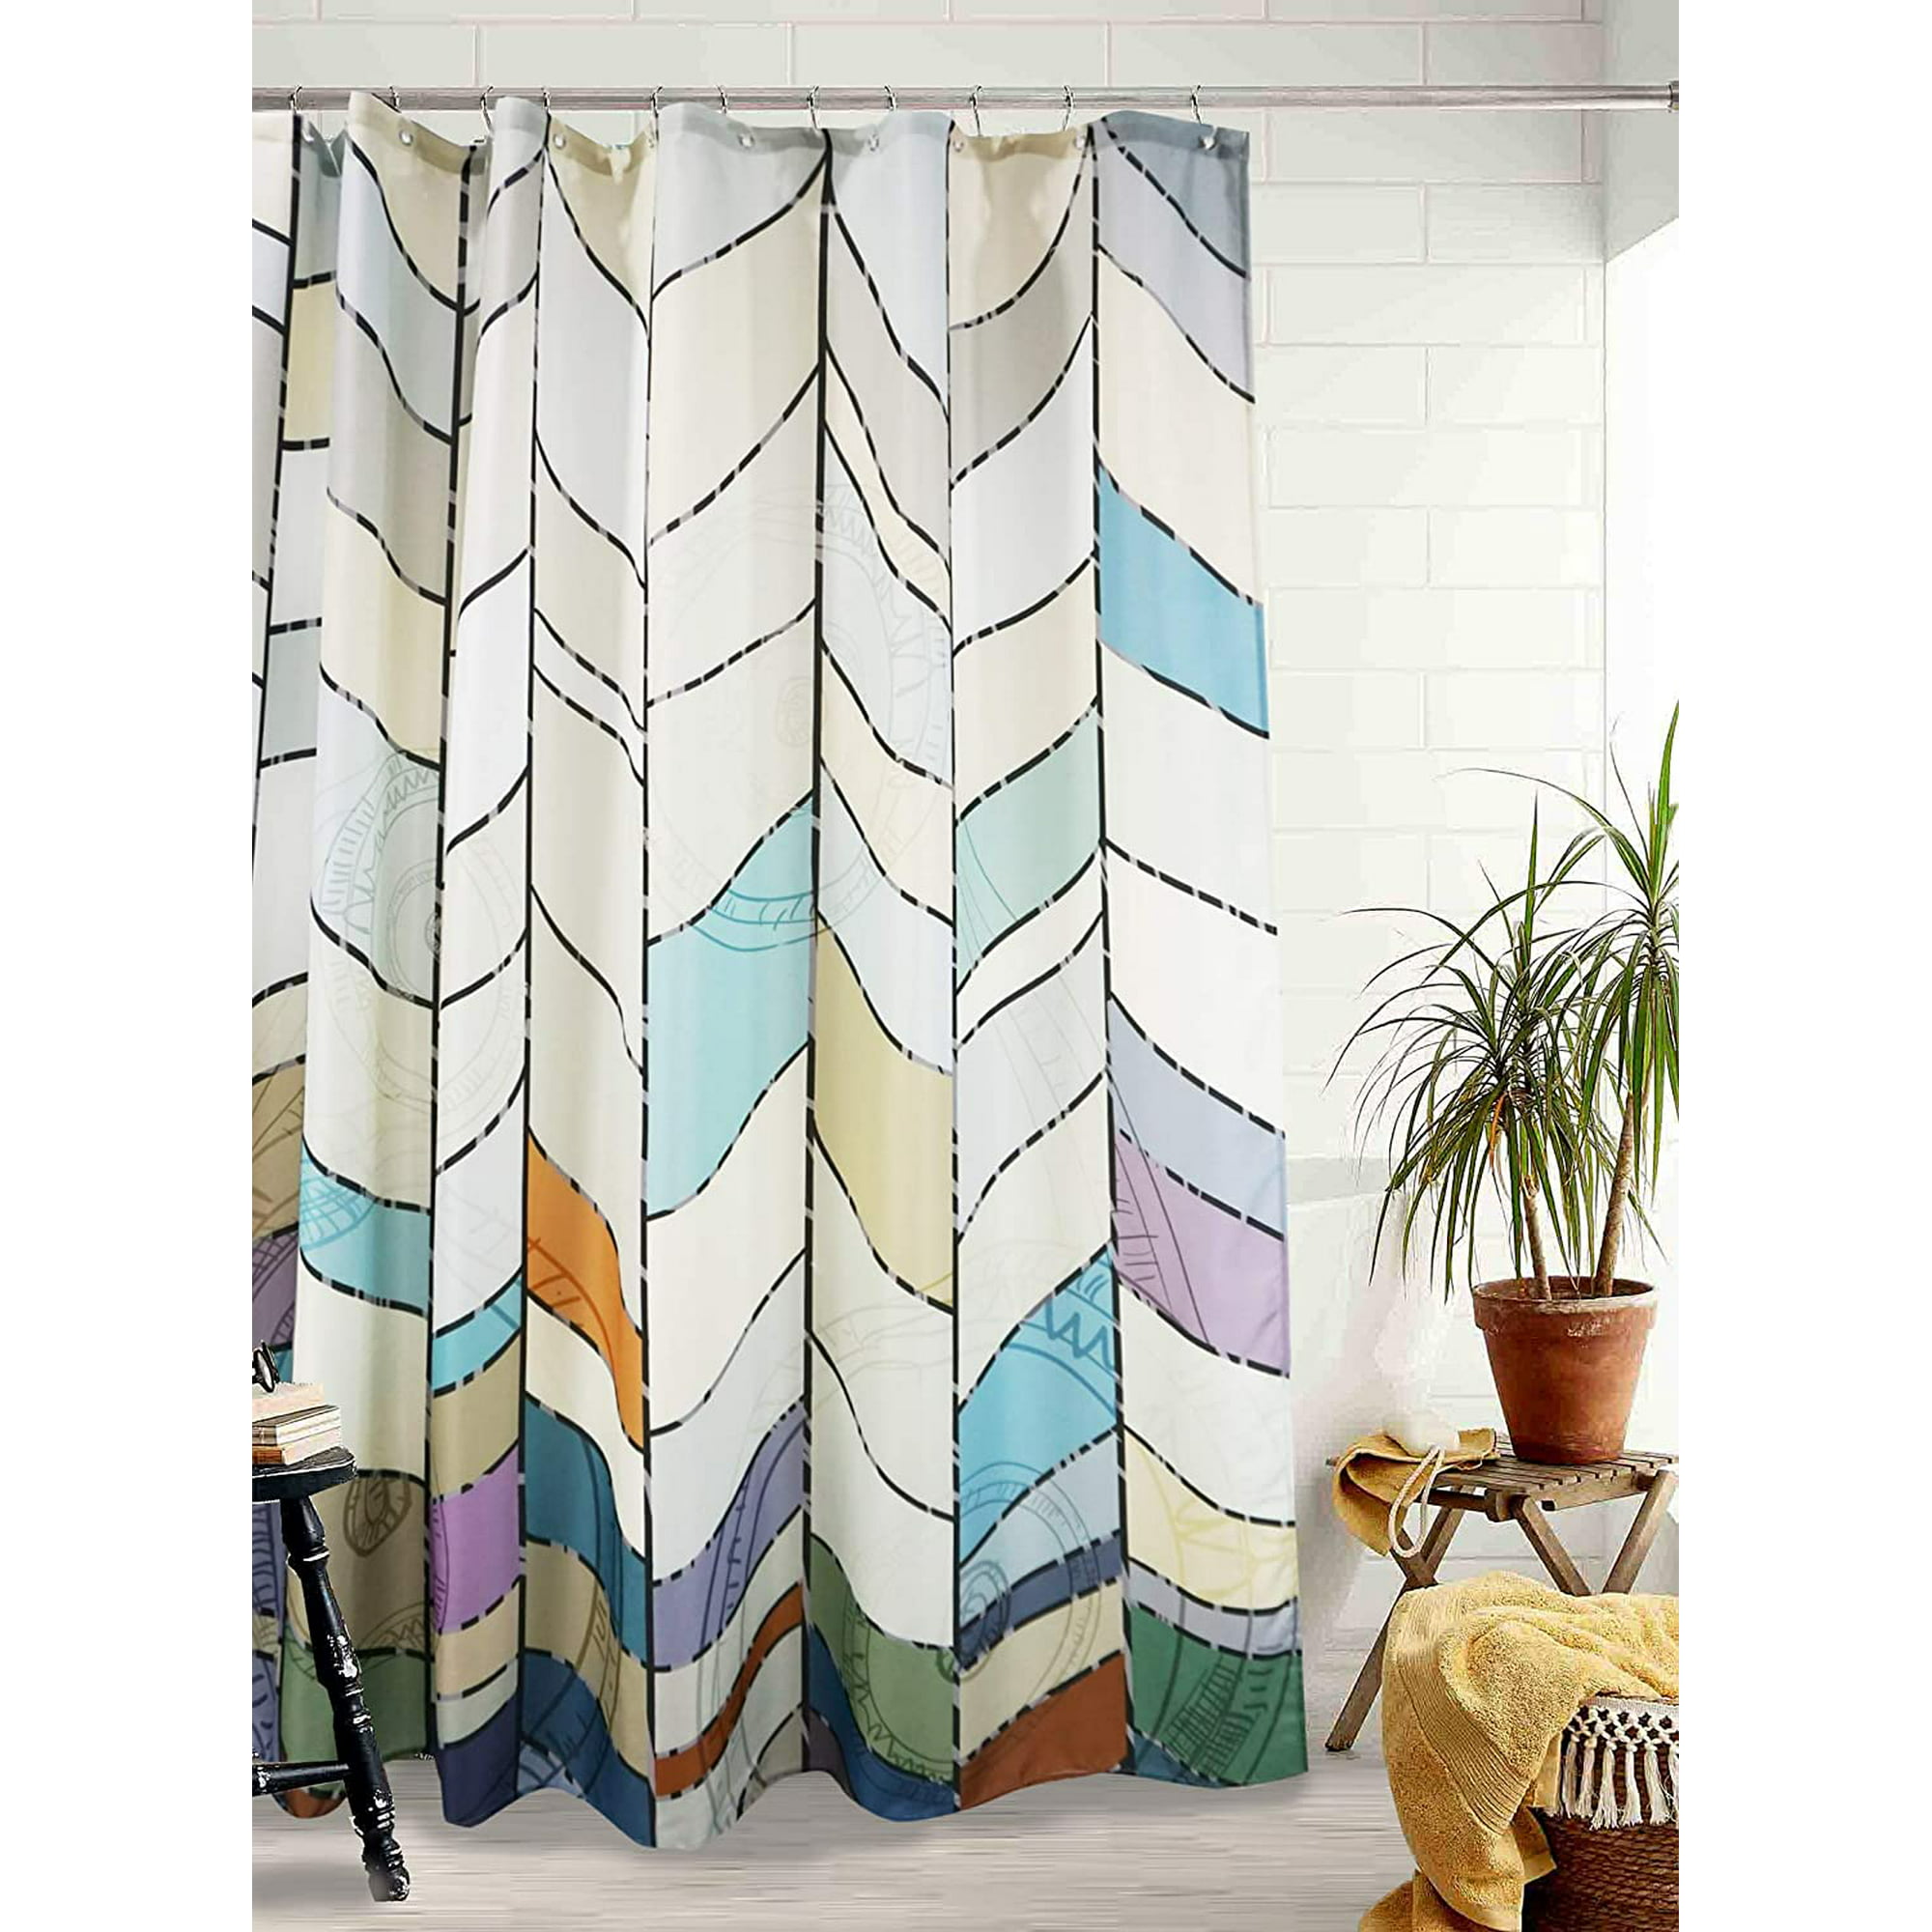 Chevron Bathroom Shower Curtain Sets, Extra Long Chevron Shower Curtain